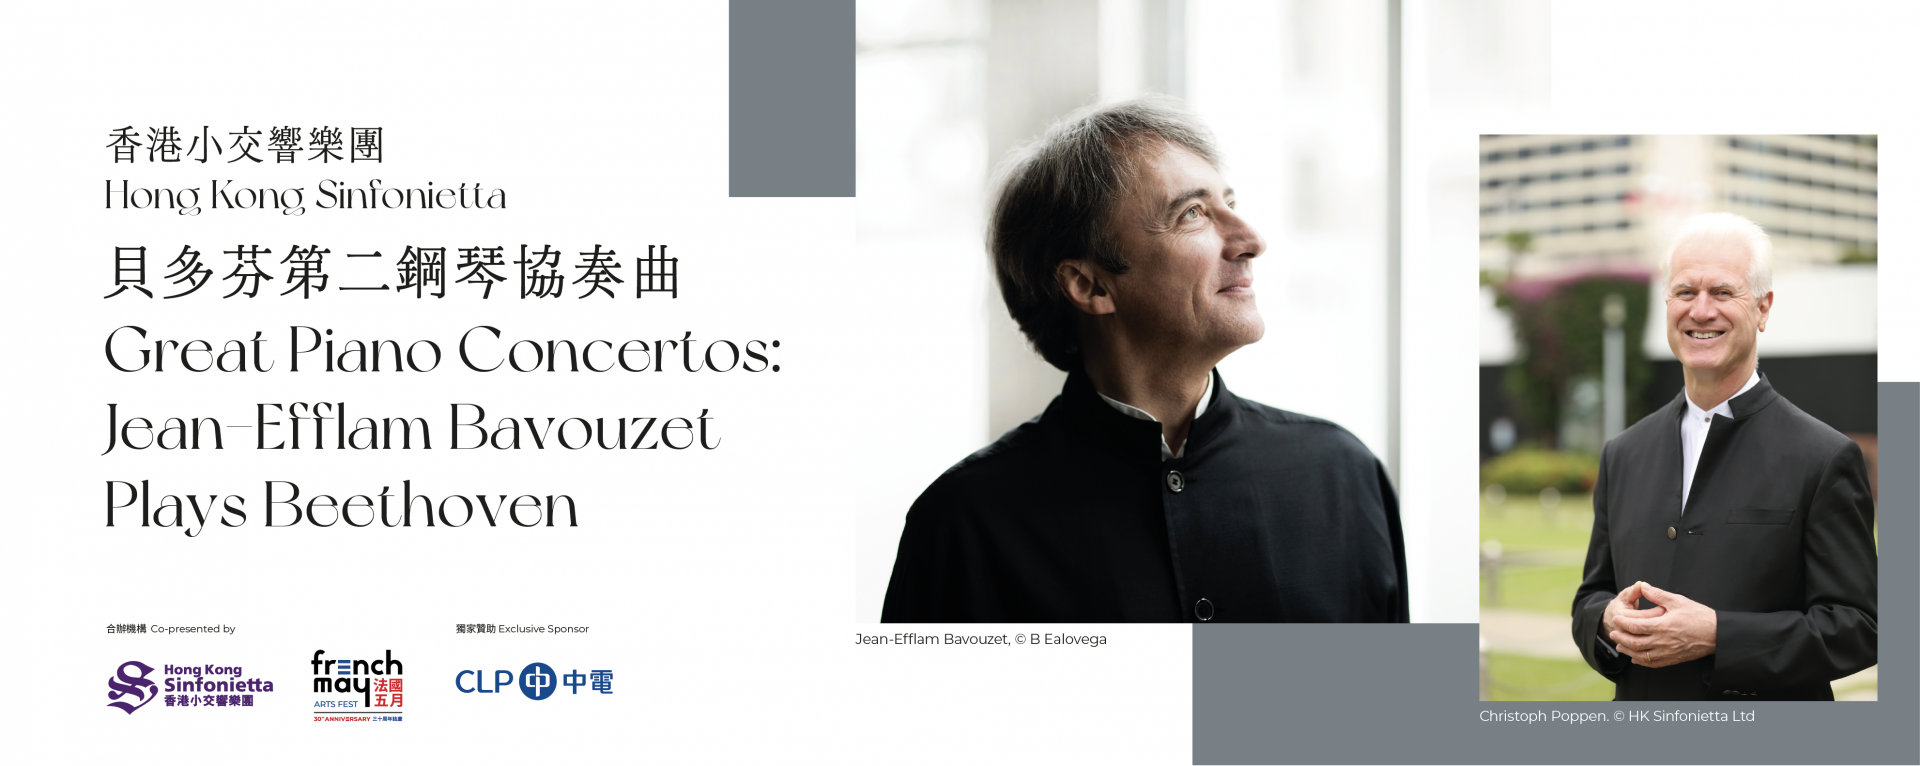 Great Piano Concertos: Jean-Efflam Bavouzet Plays Beethoven